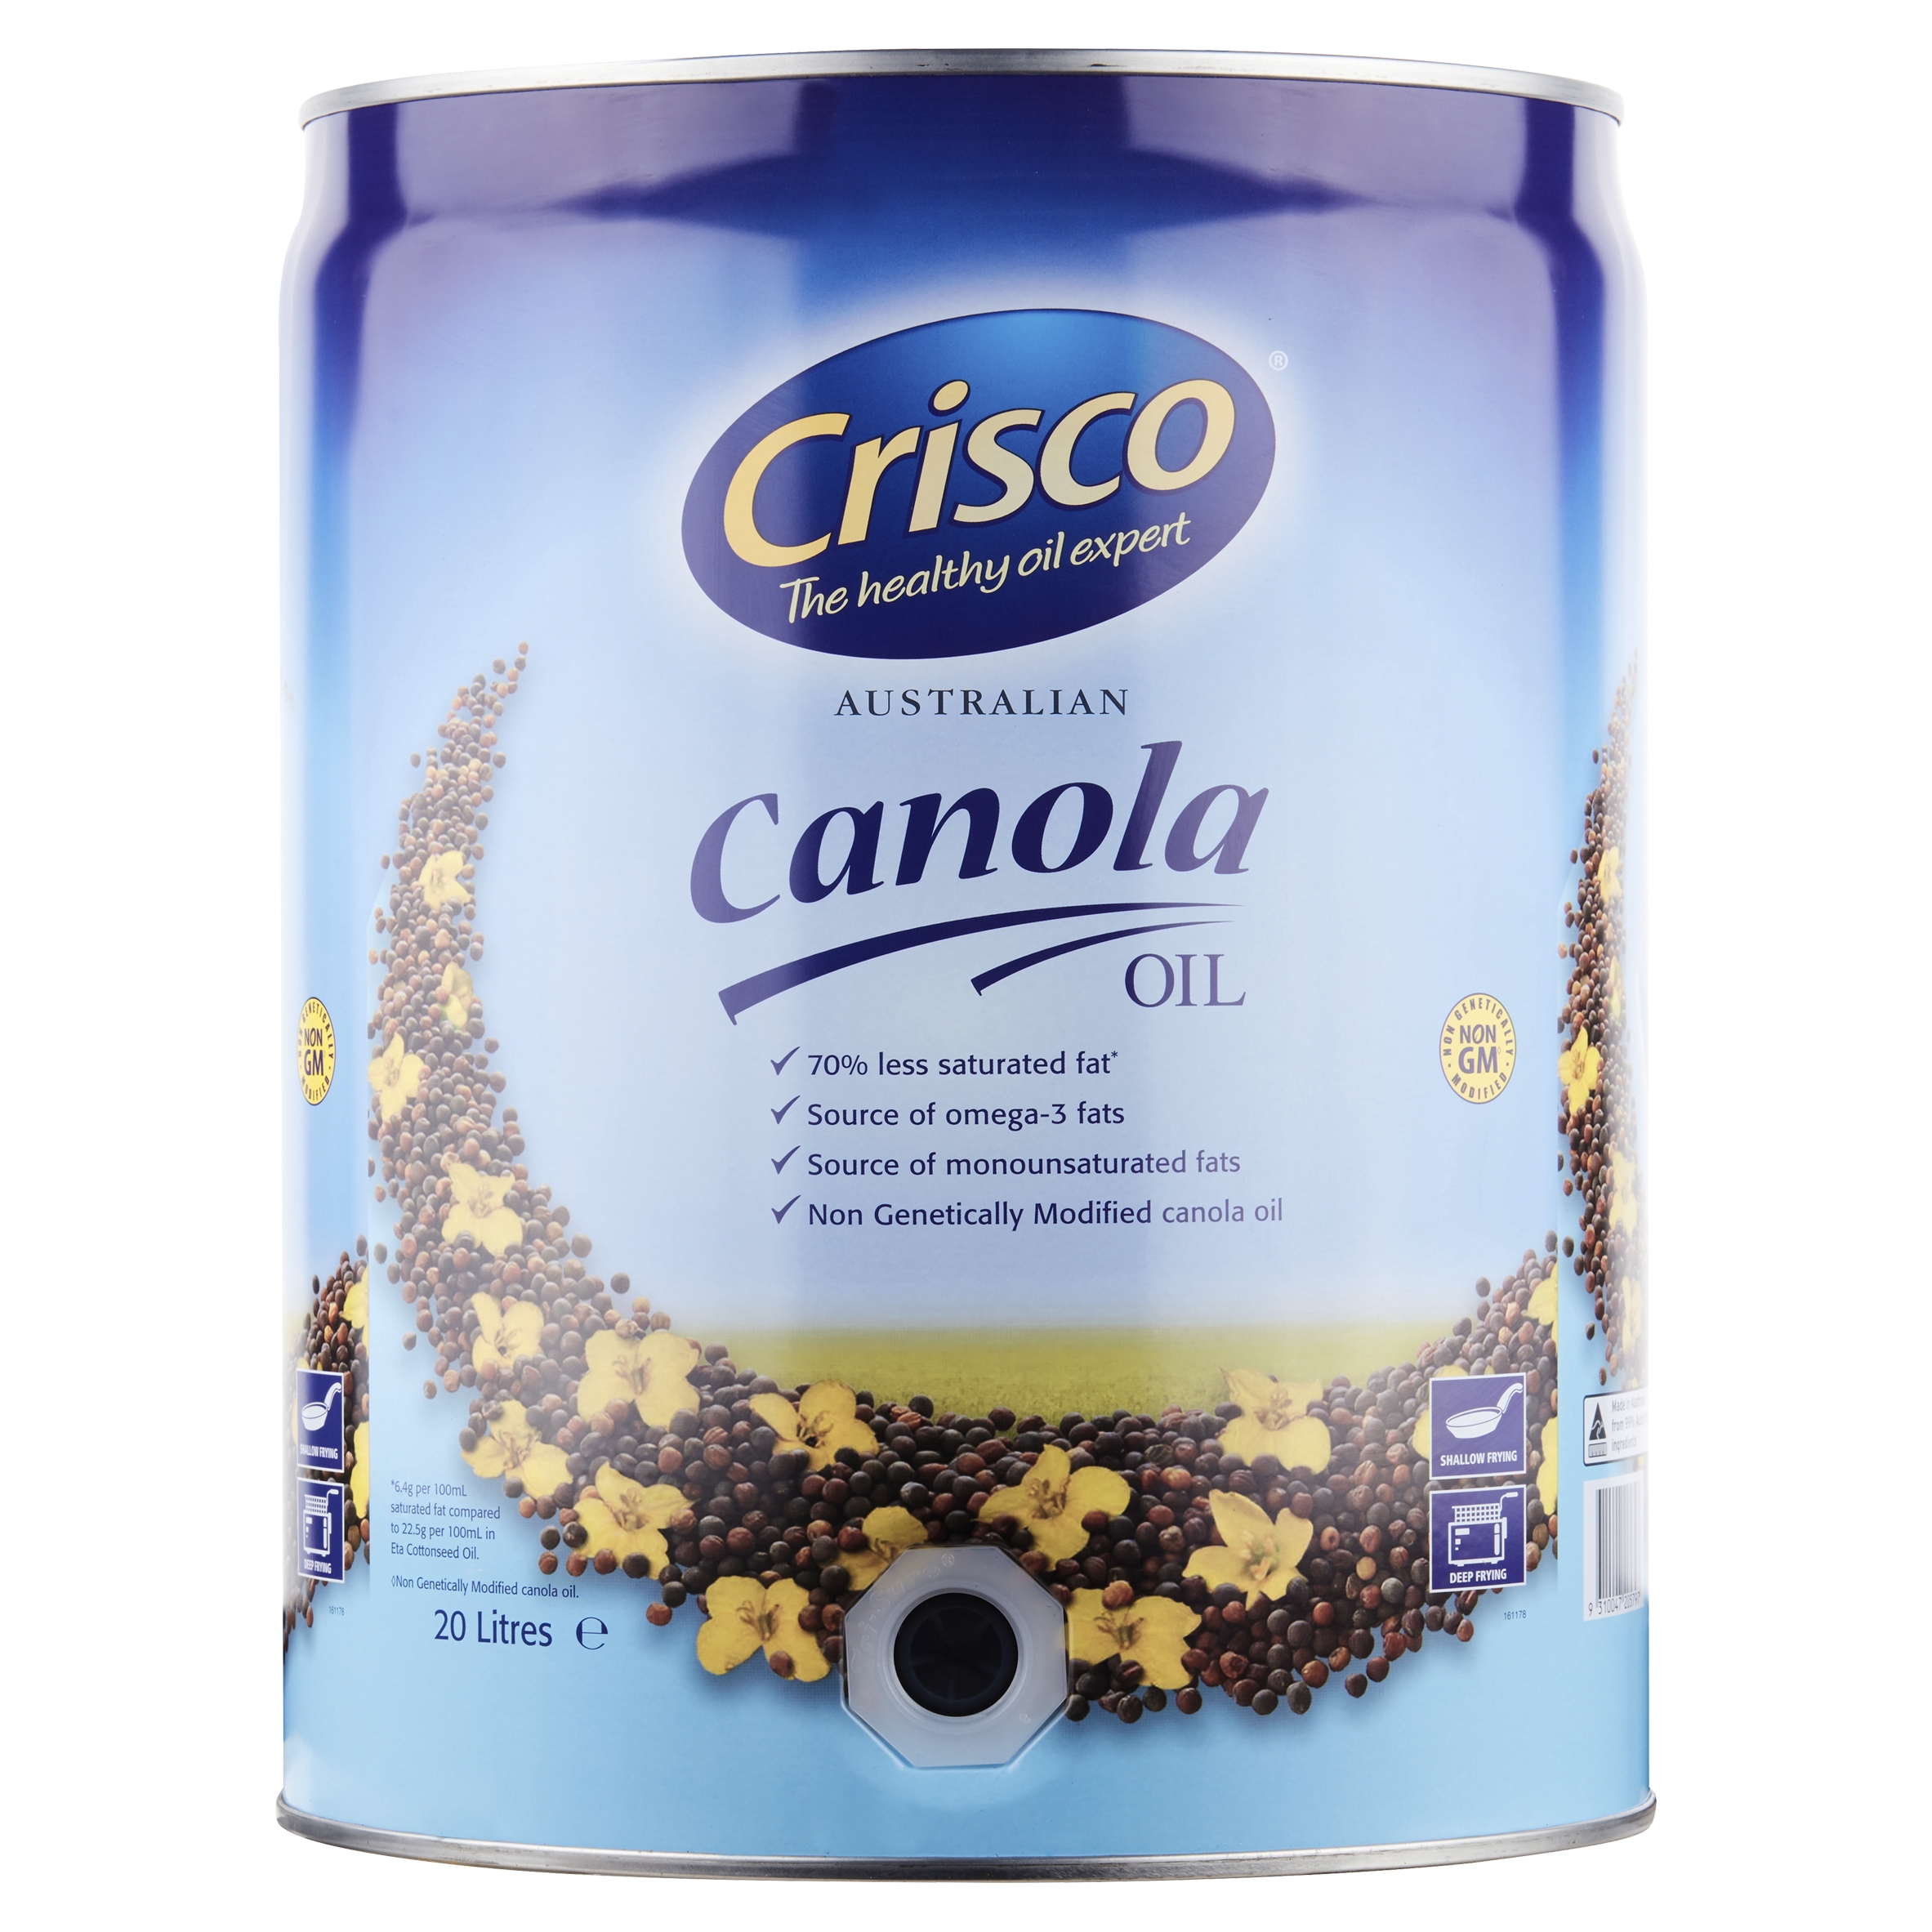 Crisco Australian Canola Oil 20 Litres product photo